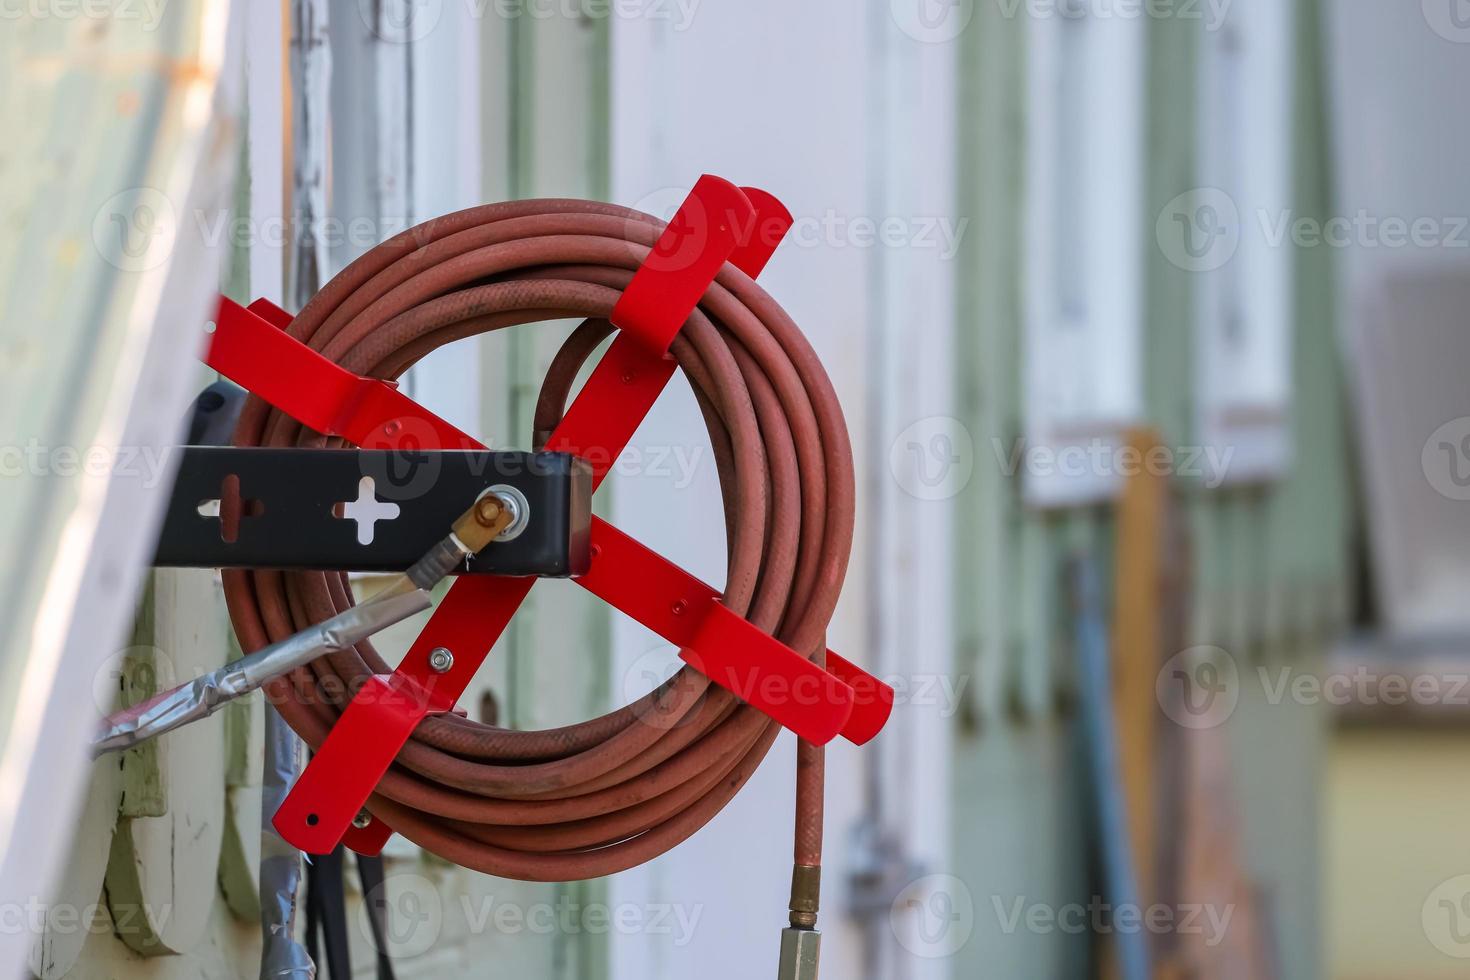 https://static.vecteezy.com/system/resources/previews/017/008/460/non_2x/close-up-view-of-air-compressor-hose-holder-photo.jpg